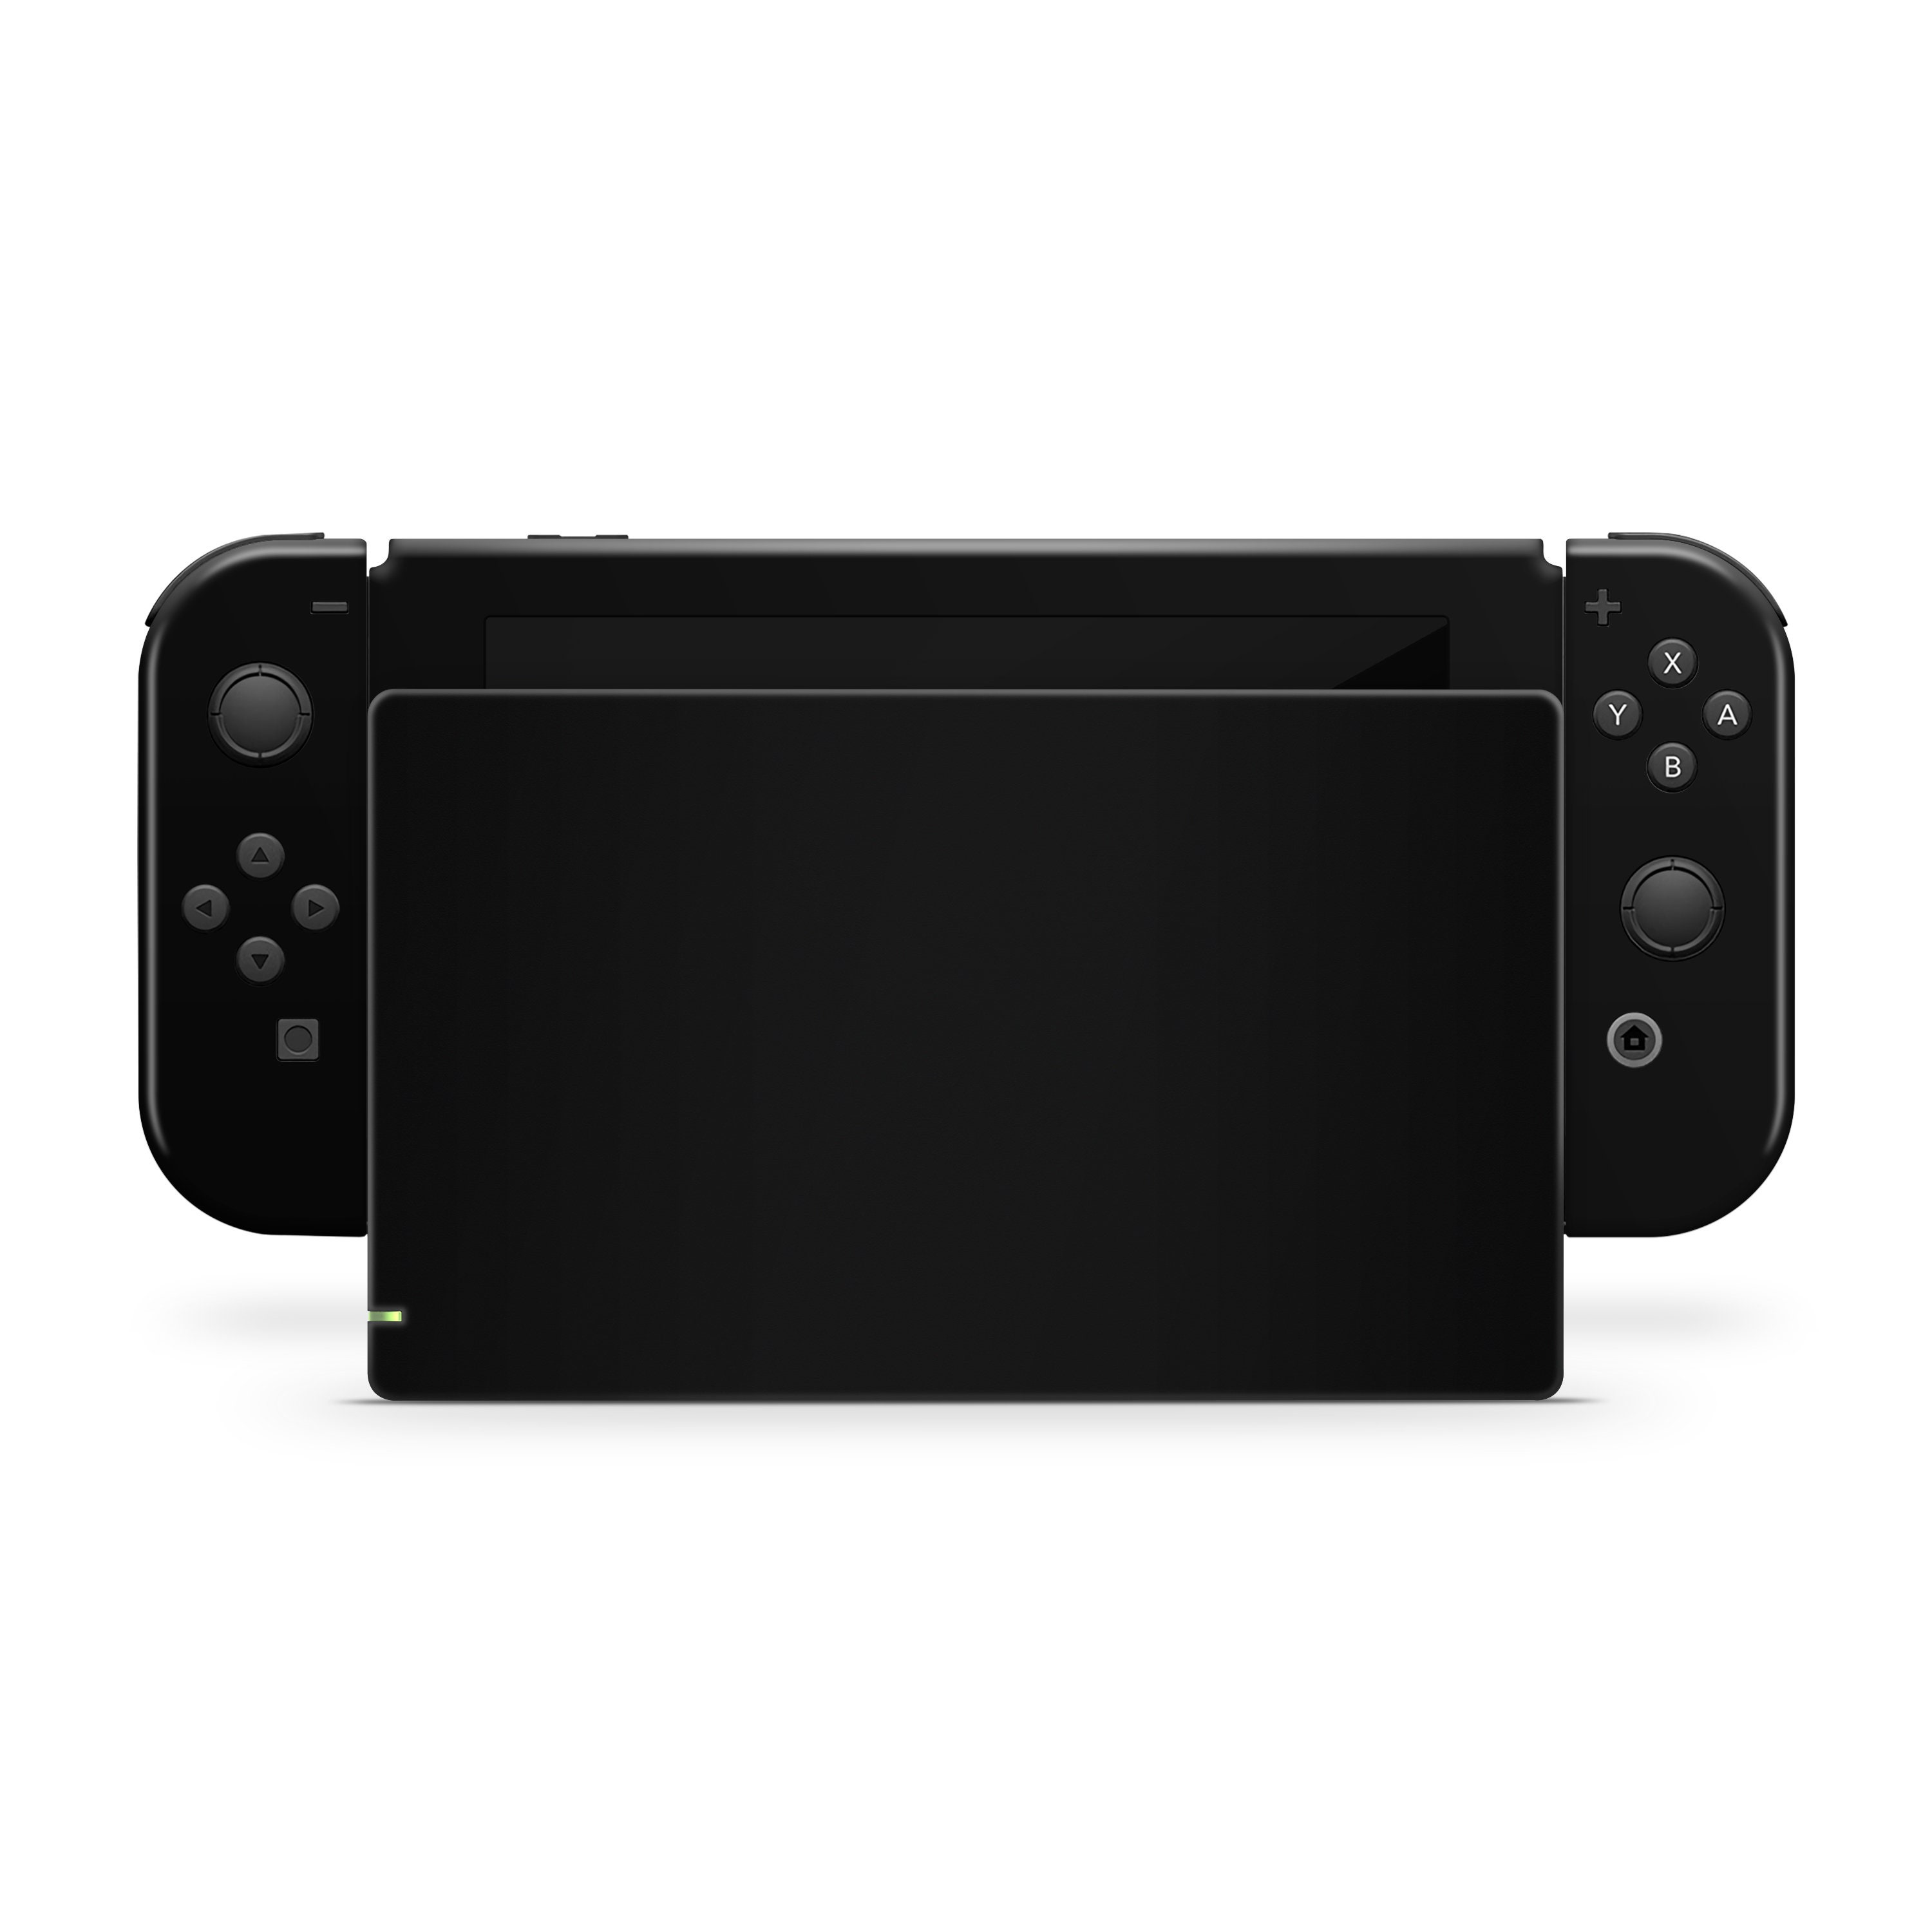 Nintendo Switch Skin // Schwarzer Aufkleber für Joy-Con Gaming Controller  Konsole & Dock // OLED Standard - .de